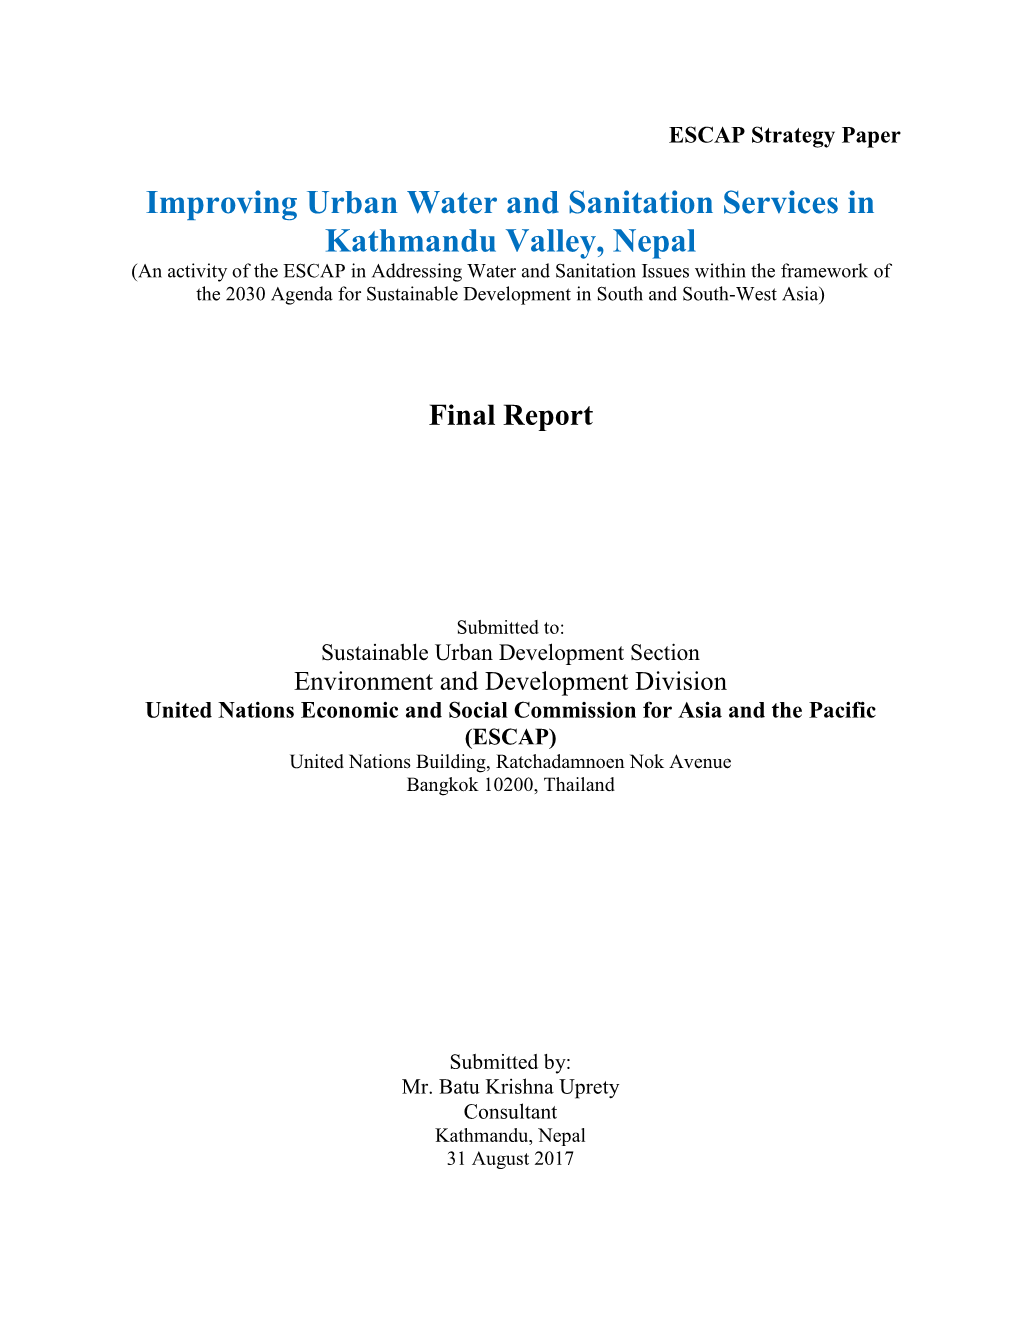 Improving Urban Water and Sanitation Services in Kathmandu Valley, Nepal